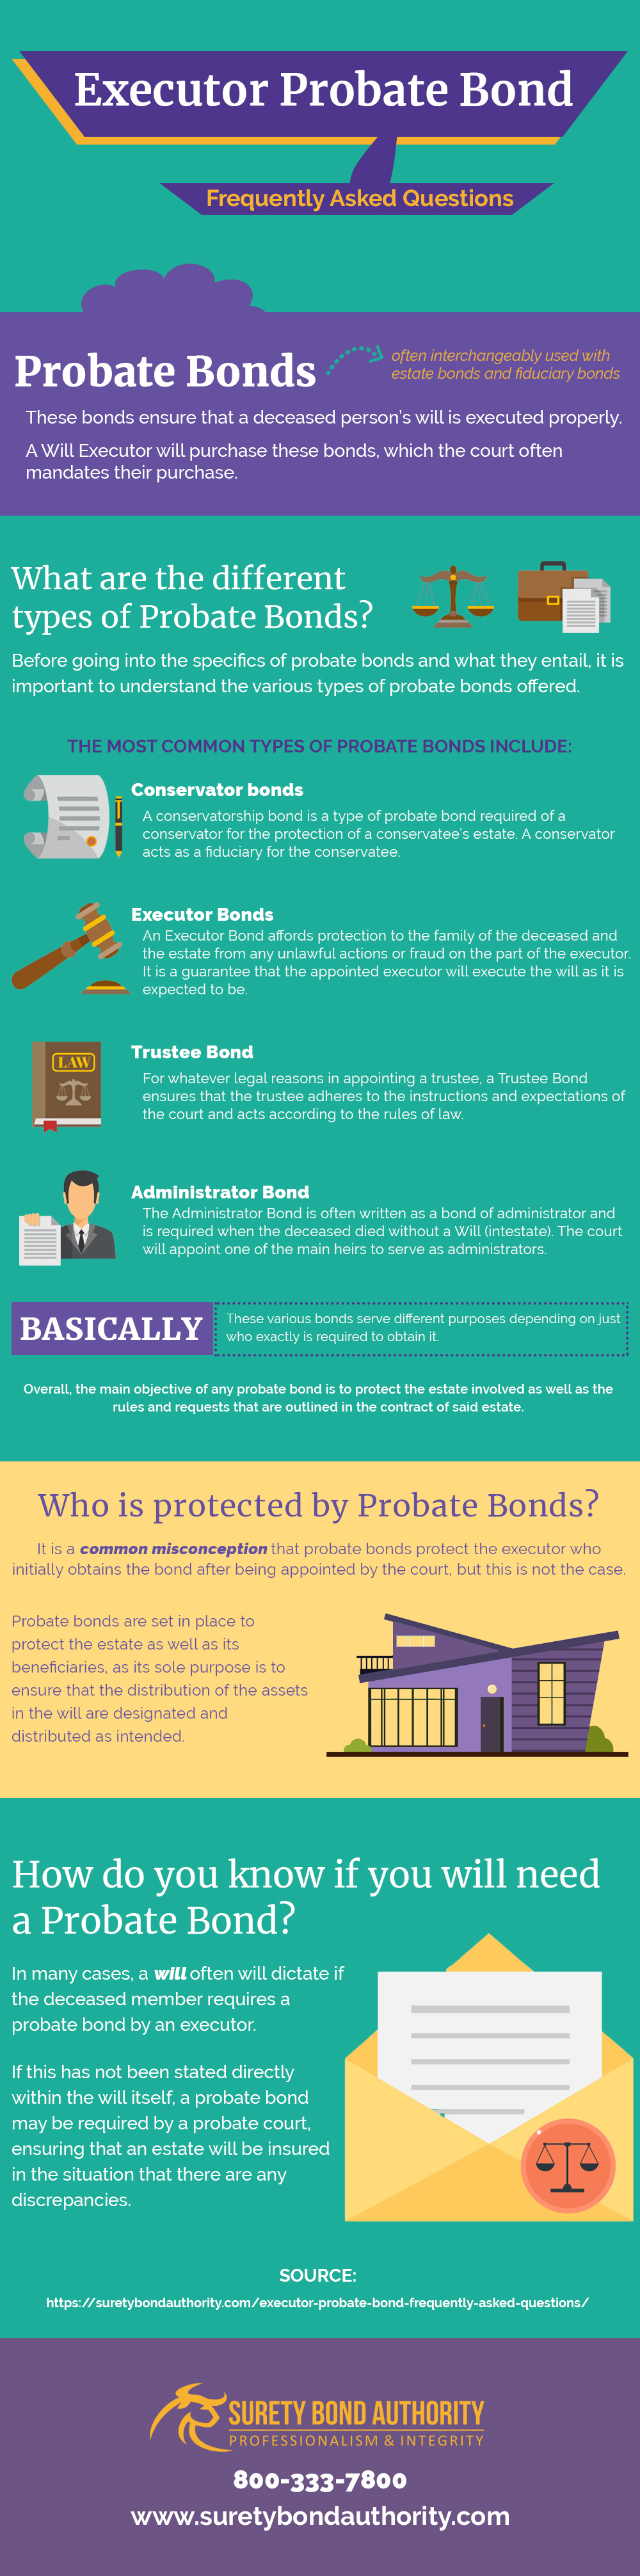 executor-probate-bond-faqs-surety-bond-authority